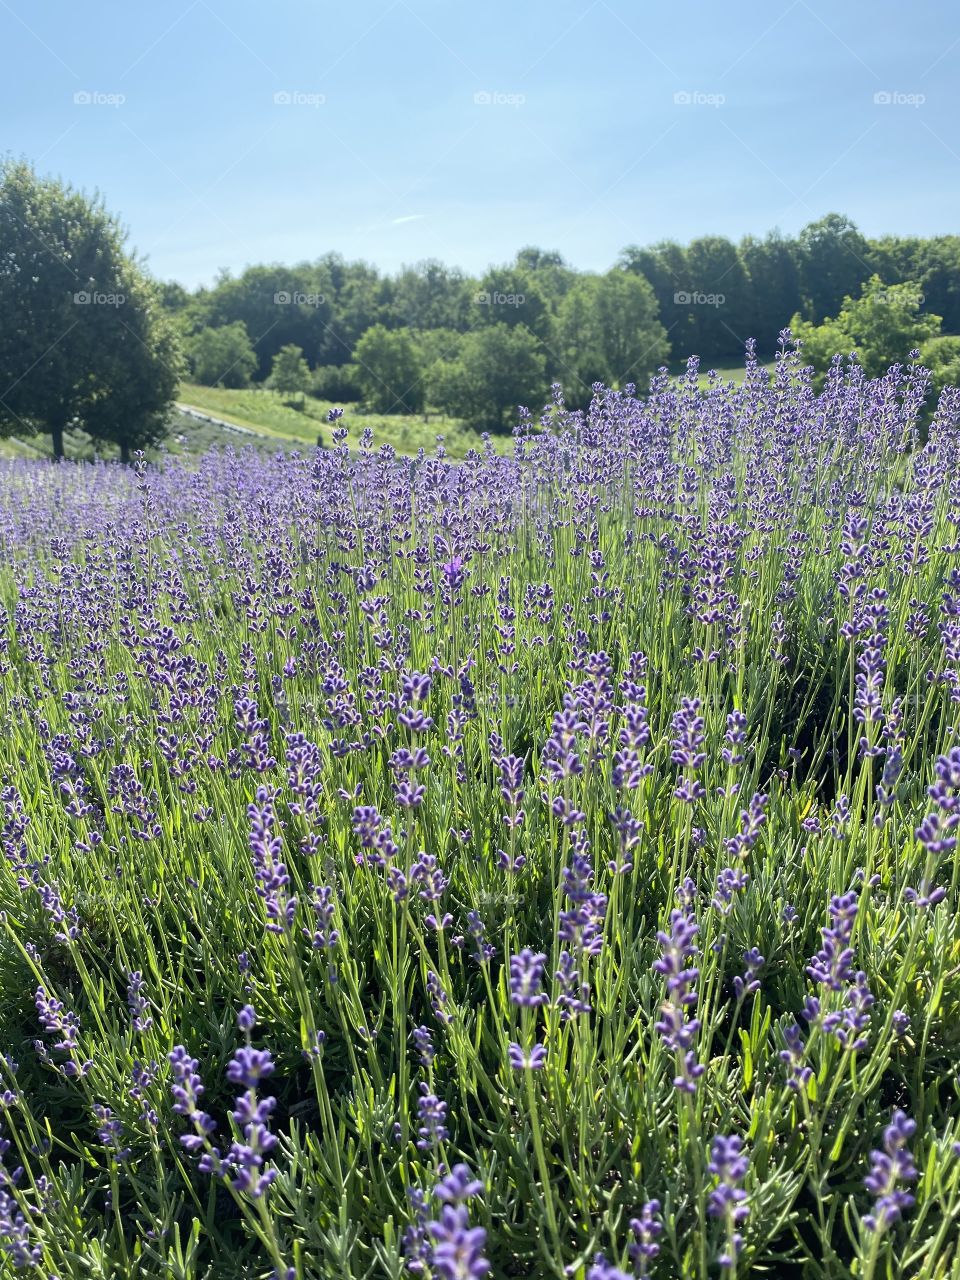 Lavender swimming in a field.